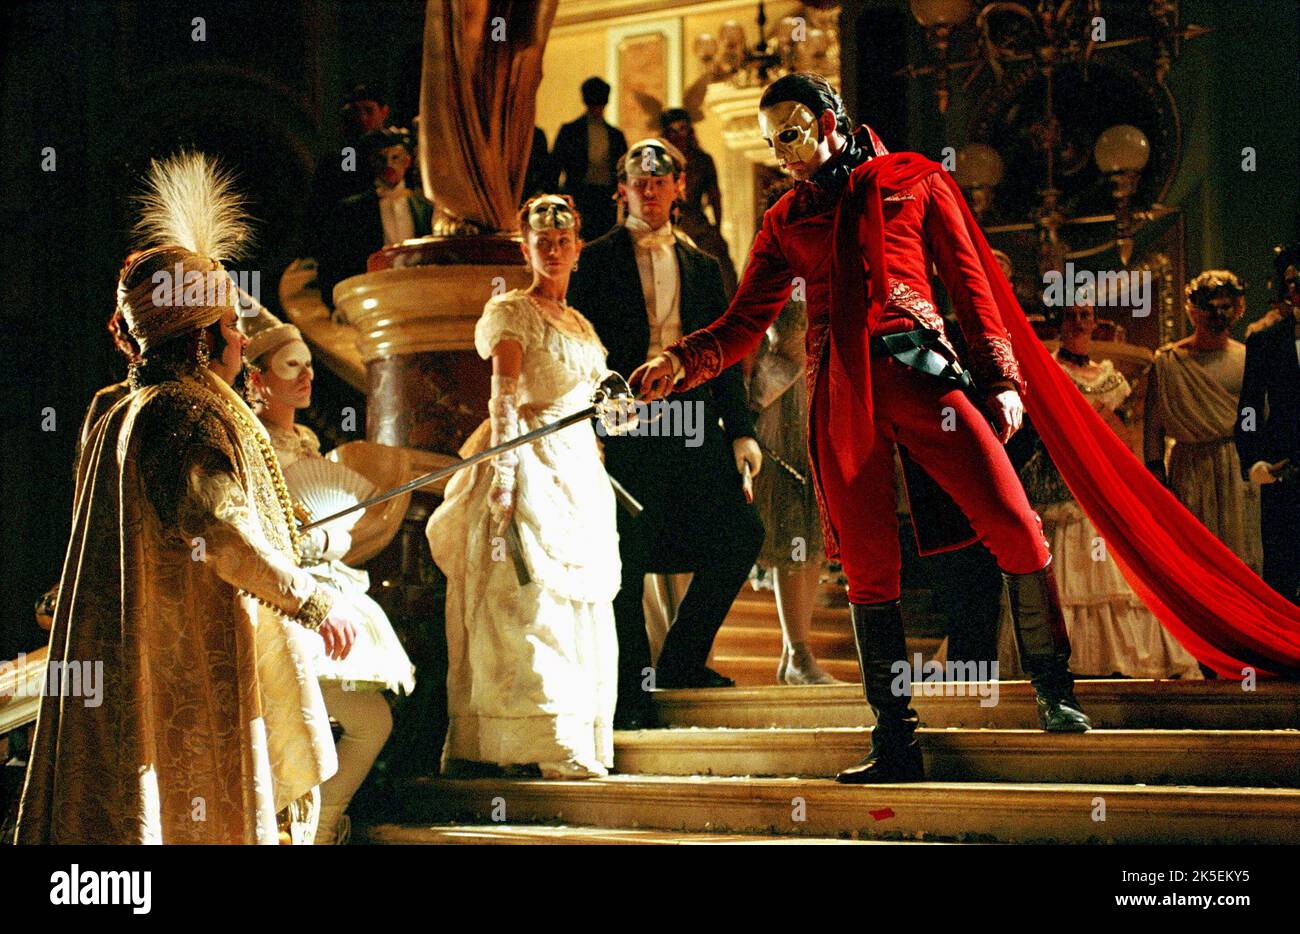 is gerard butler actually singing in phantom of the opera